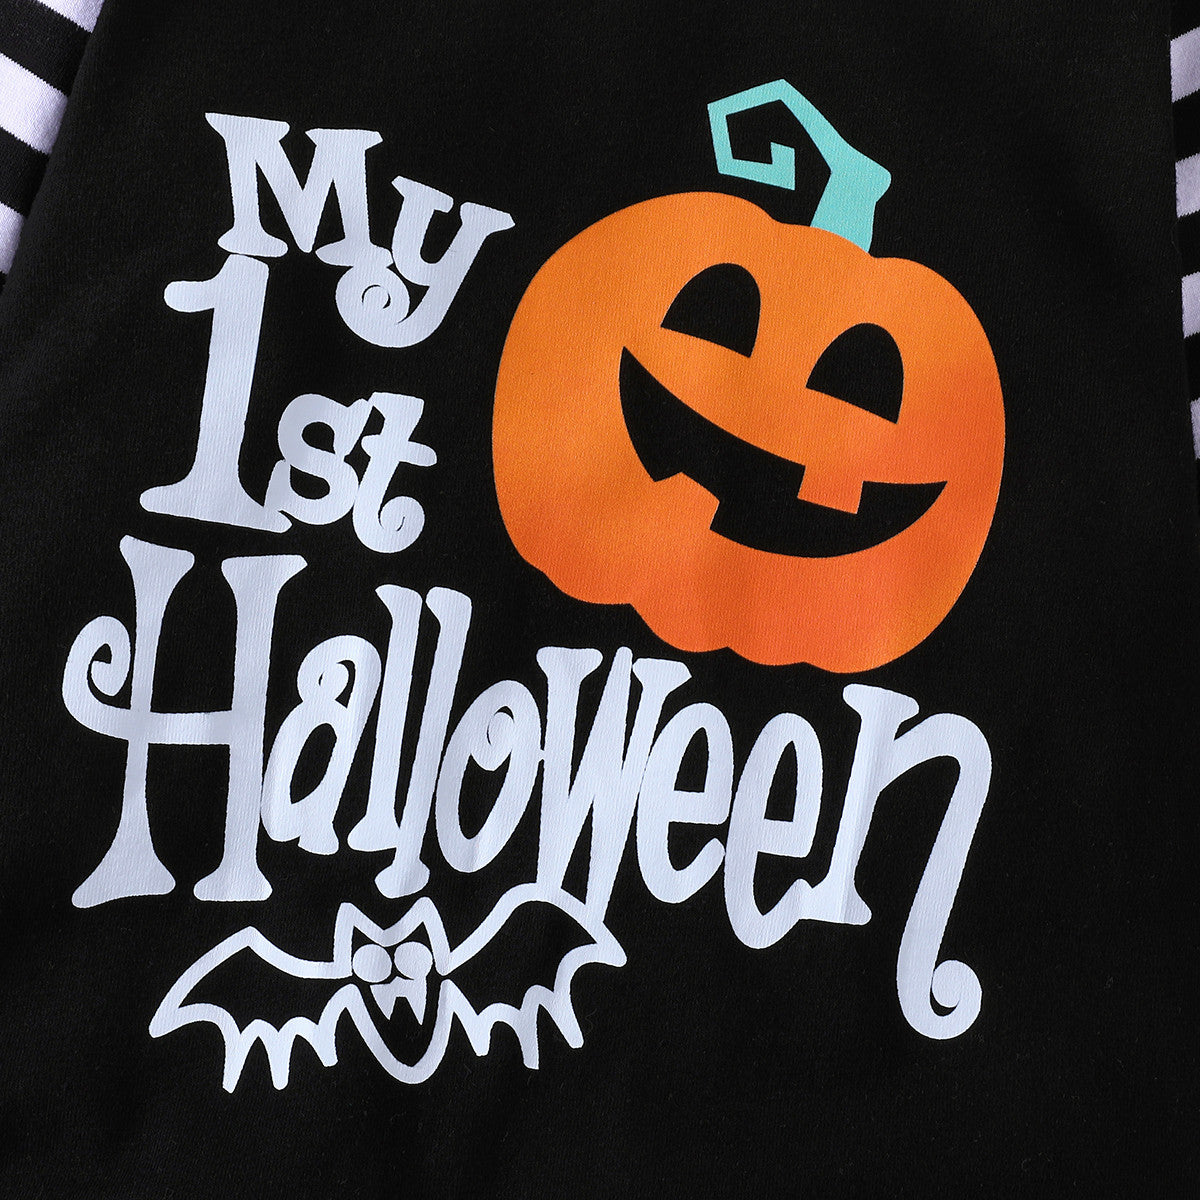 2PCS Halloween Letter Pumpkin Printed Long Sleeve Baby Jumpsuit